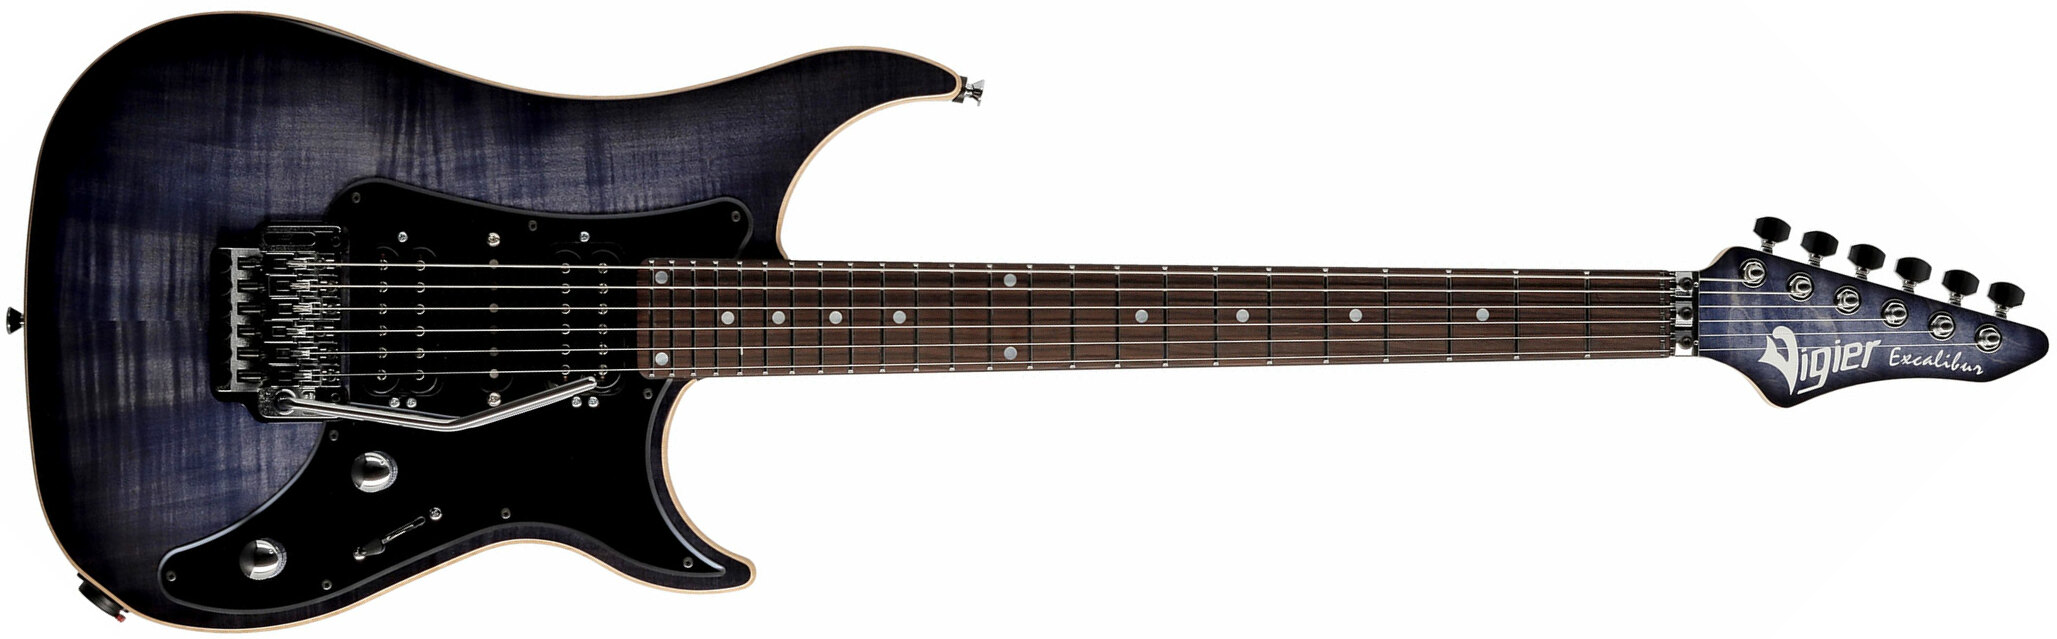 Vigier Excalibur Custom Hsh Fr Rw - Deep Deep Blue - E-Gitarre in Str-Form - Main picture